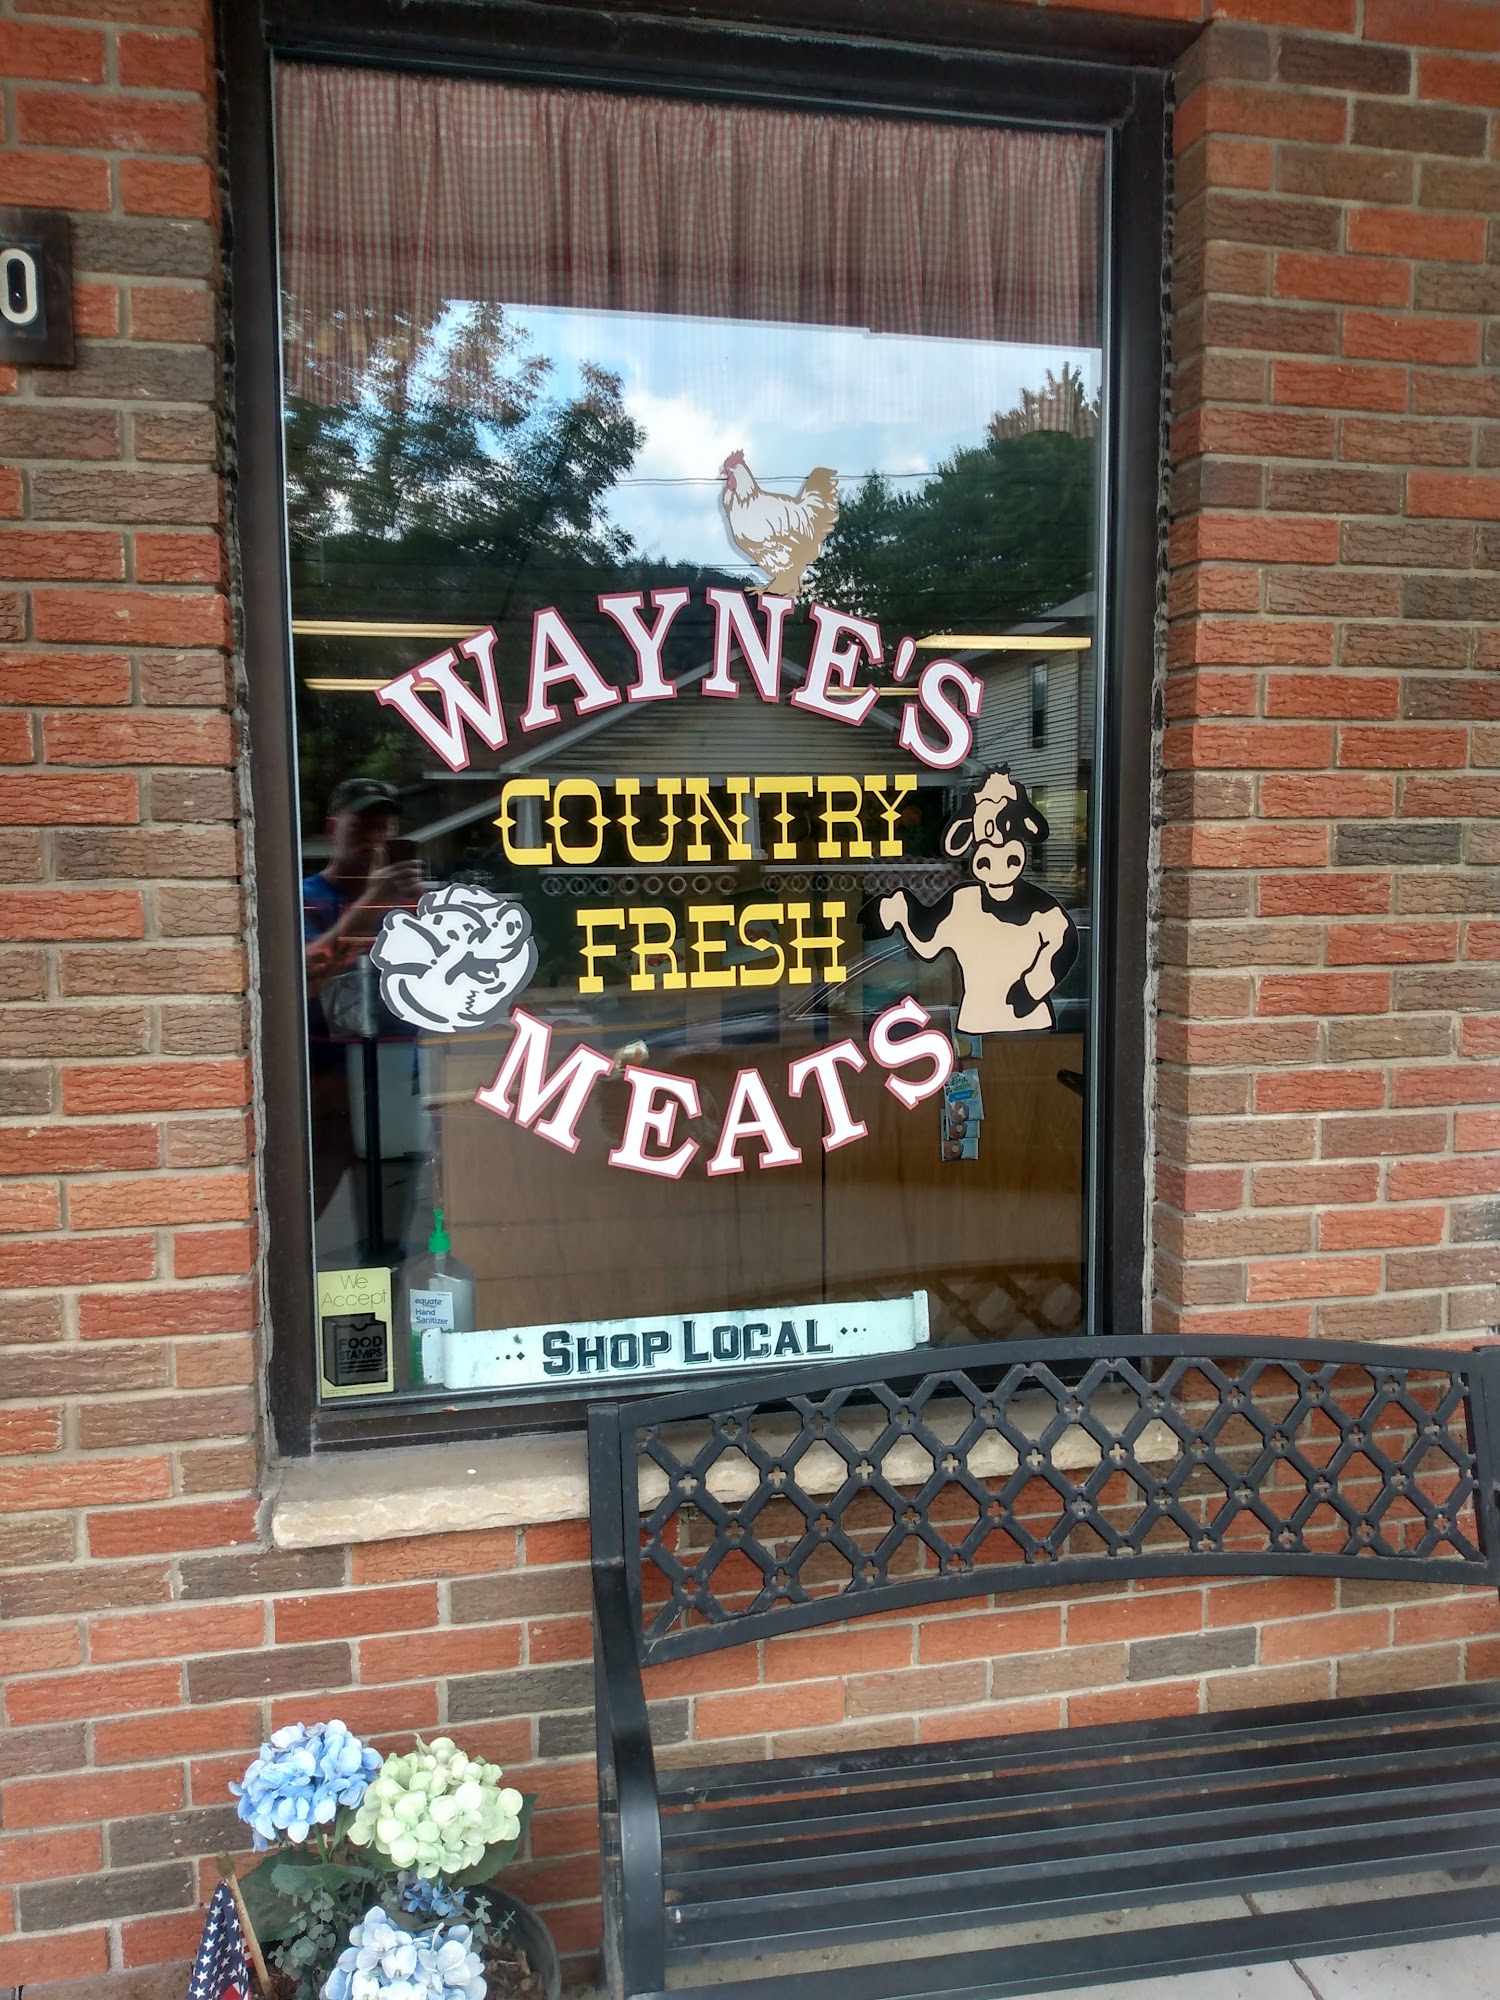 Wayne's Country Fresh Meat